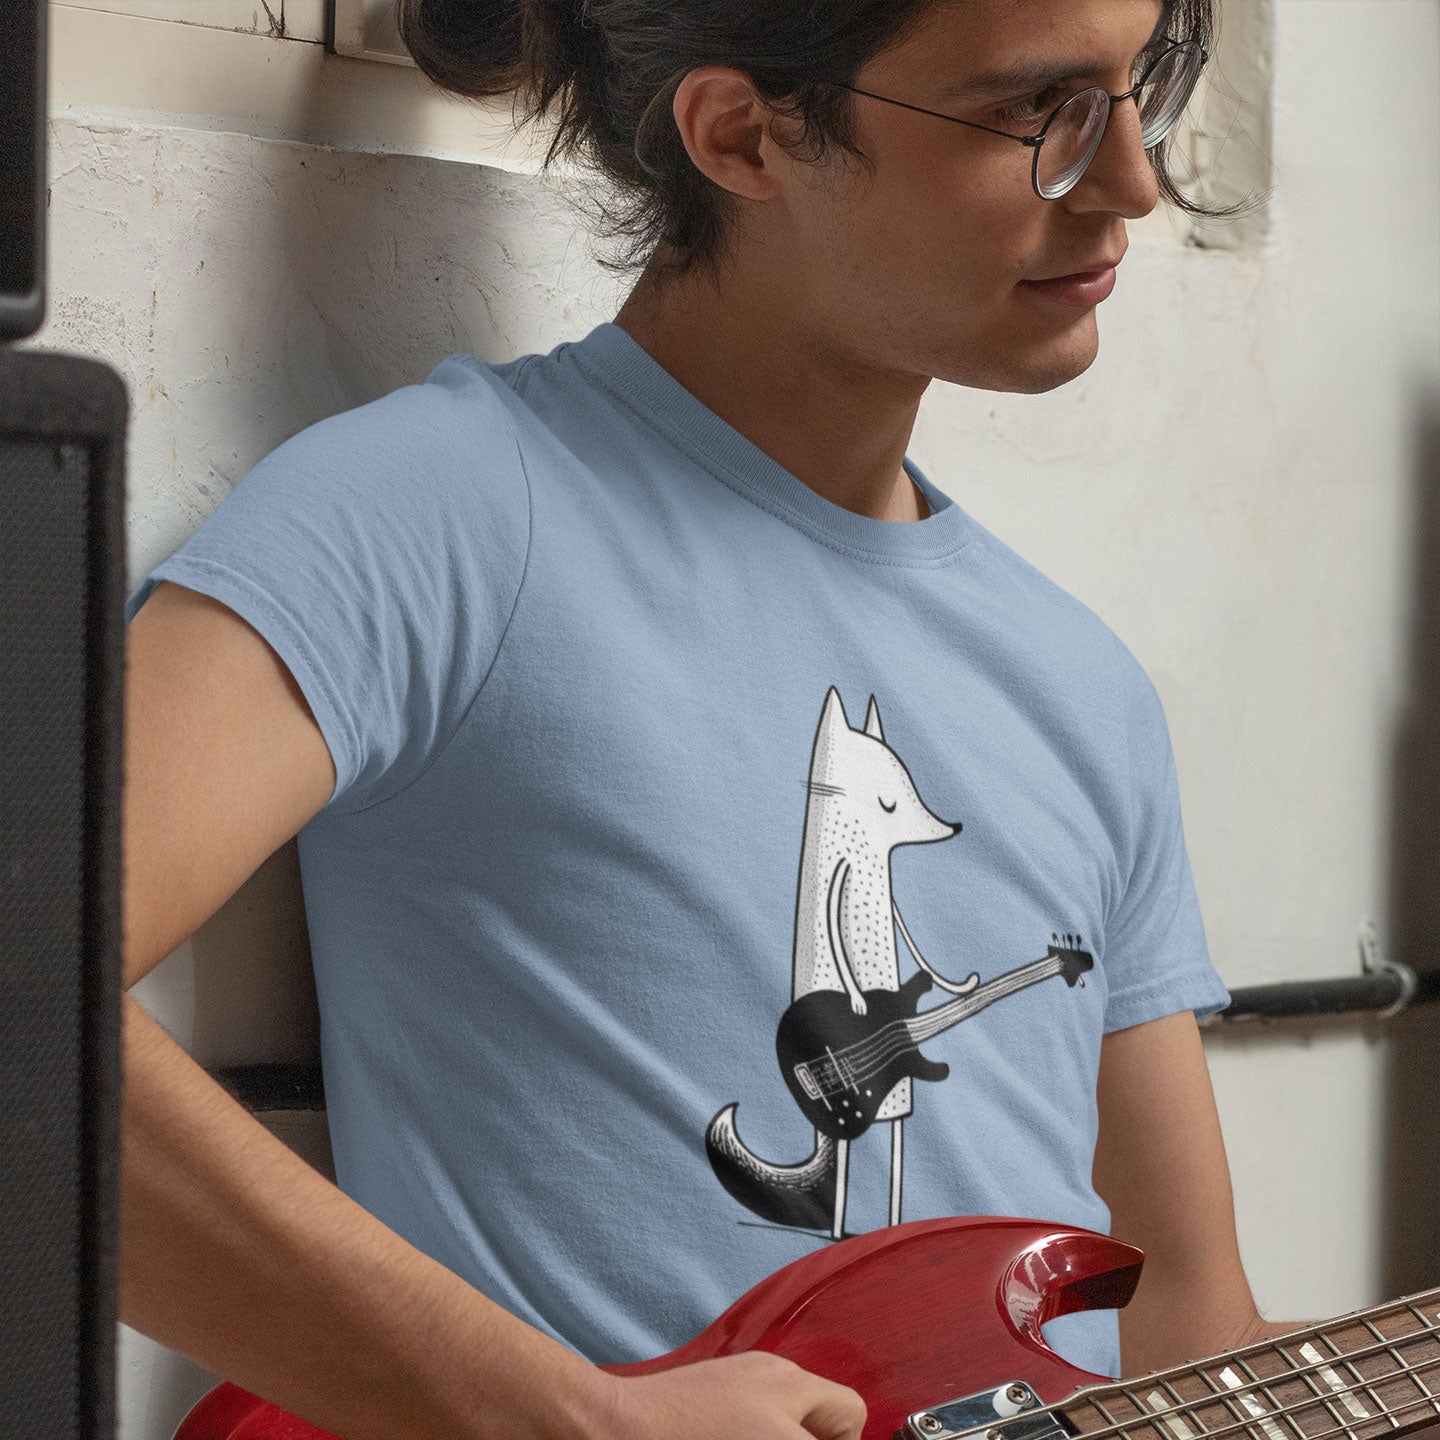 Fox playing bass guitar minimalist black and white t-shirt print